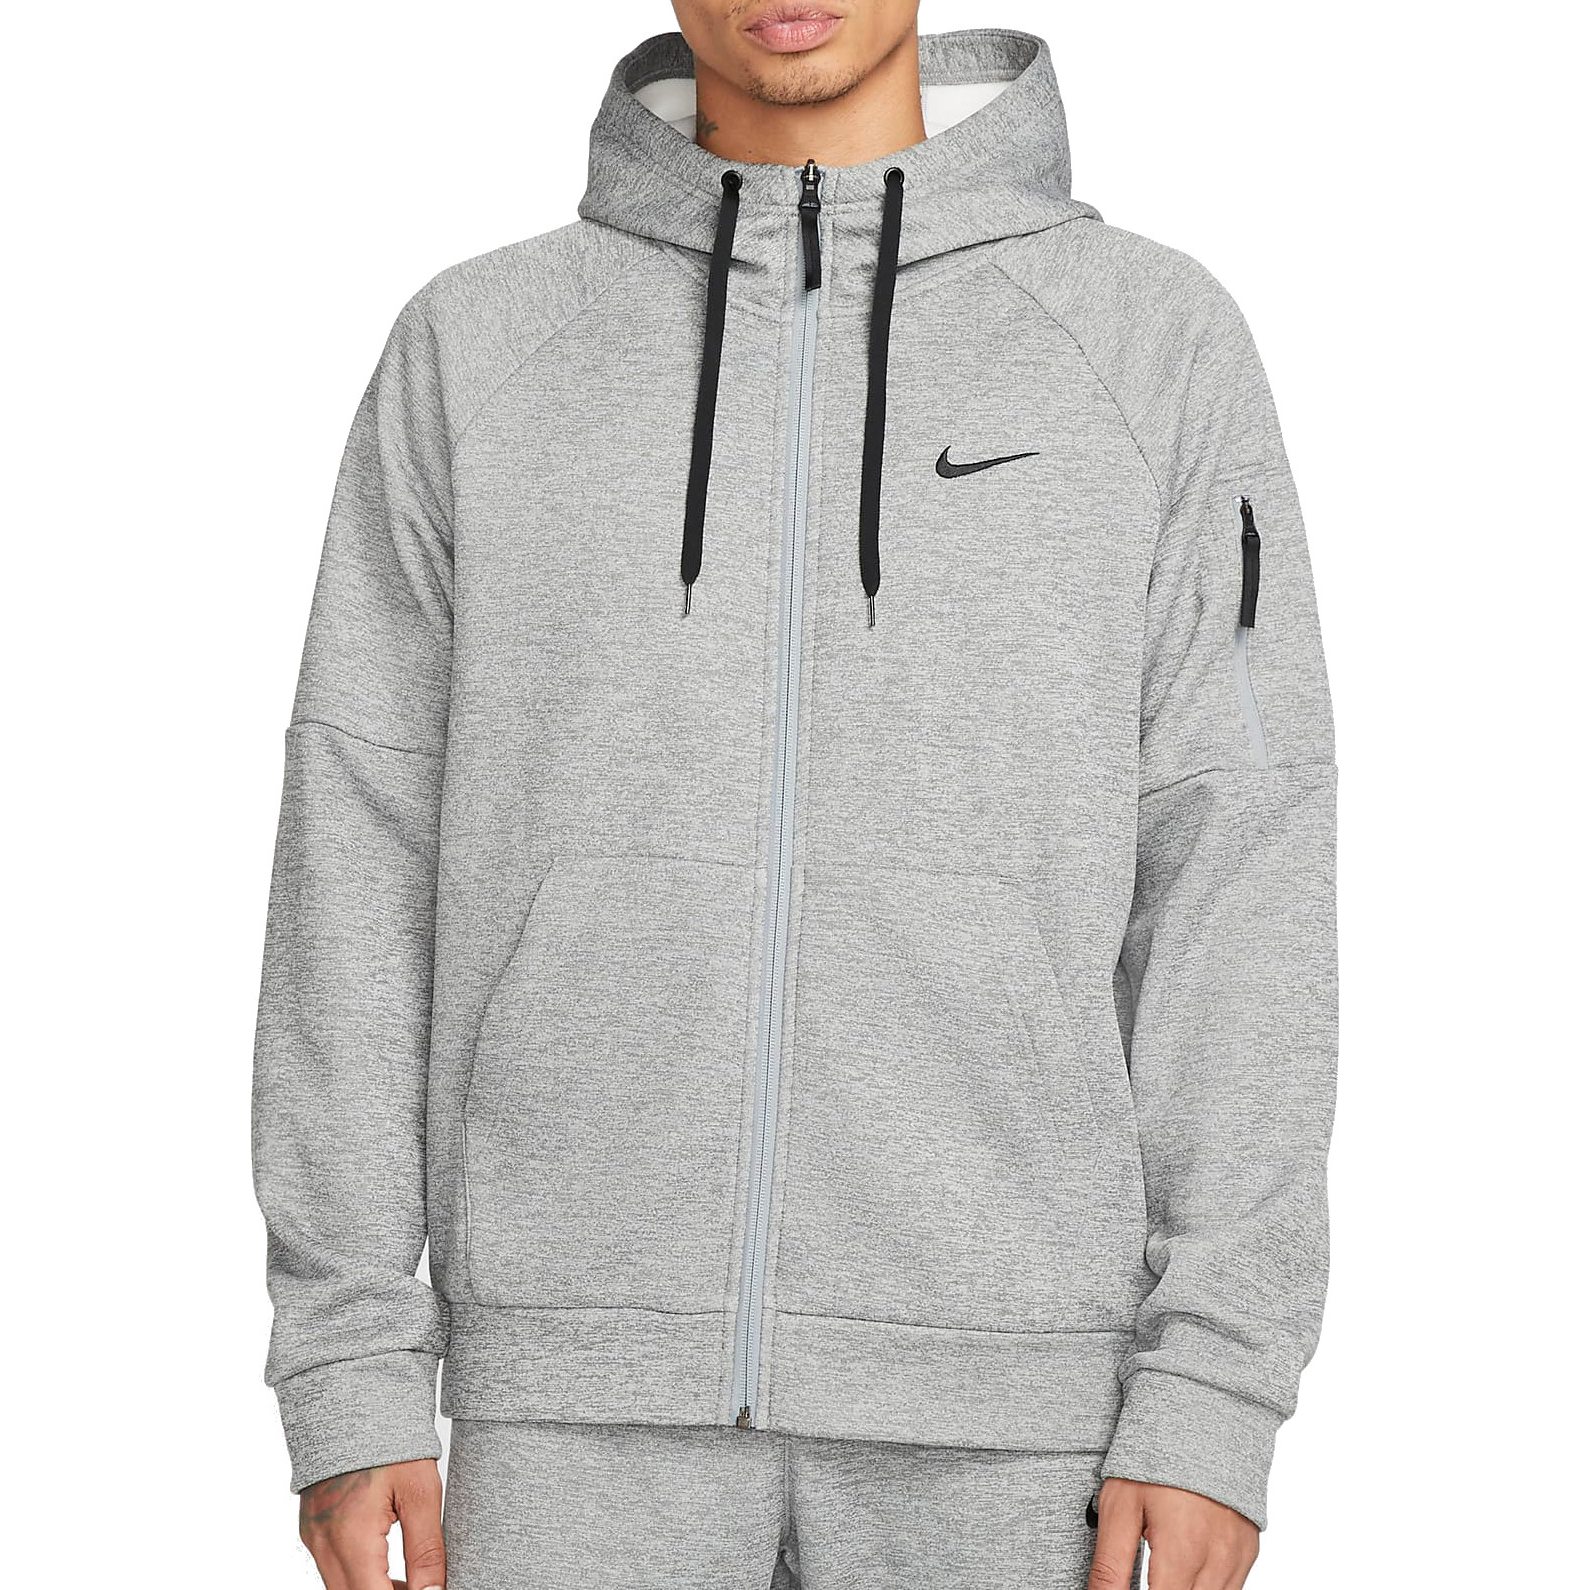 Immagine di Nike Giacca con capucha Uomo - Thermo-FIT Fitness - dark grey heather/particle grey/black DQ4830-063